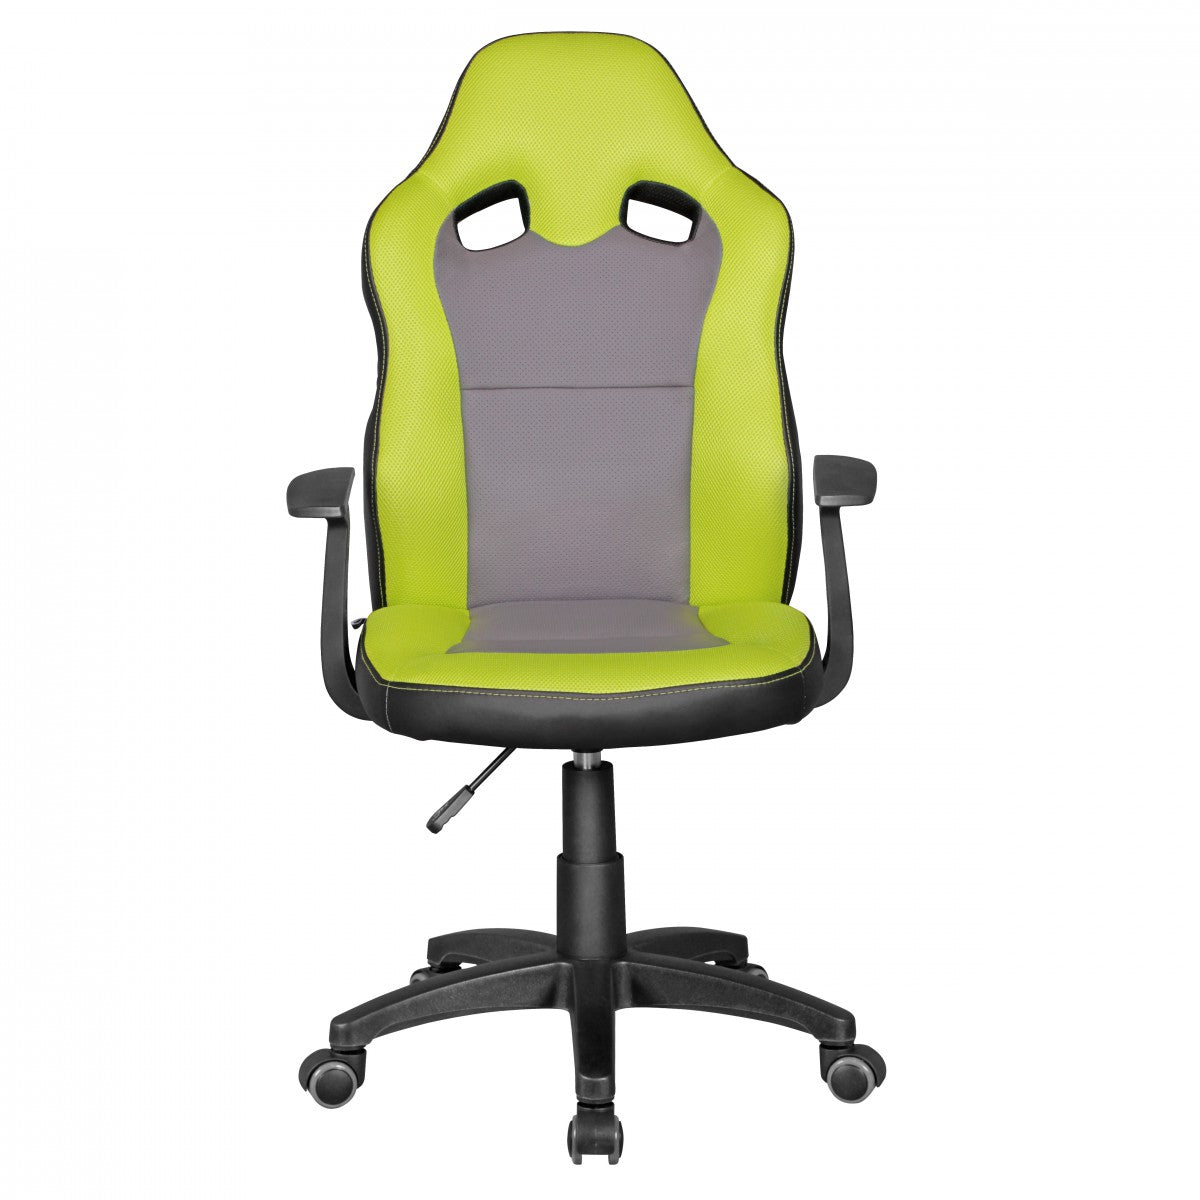 Nancy's Poteau Office Chair for Children - Swivel Chair - Ergonomic - High Chair - Yellow - Gray - Black